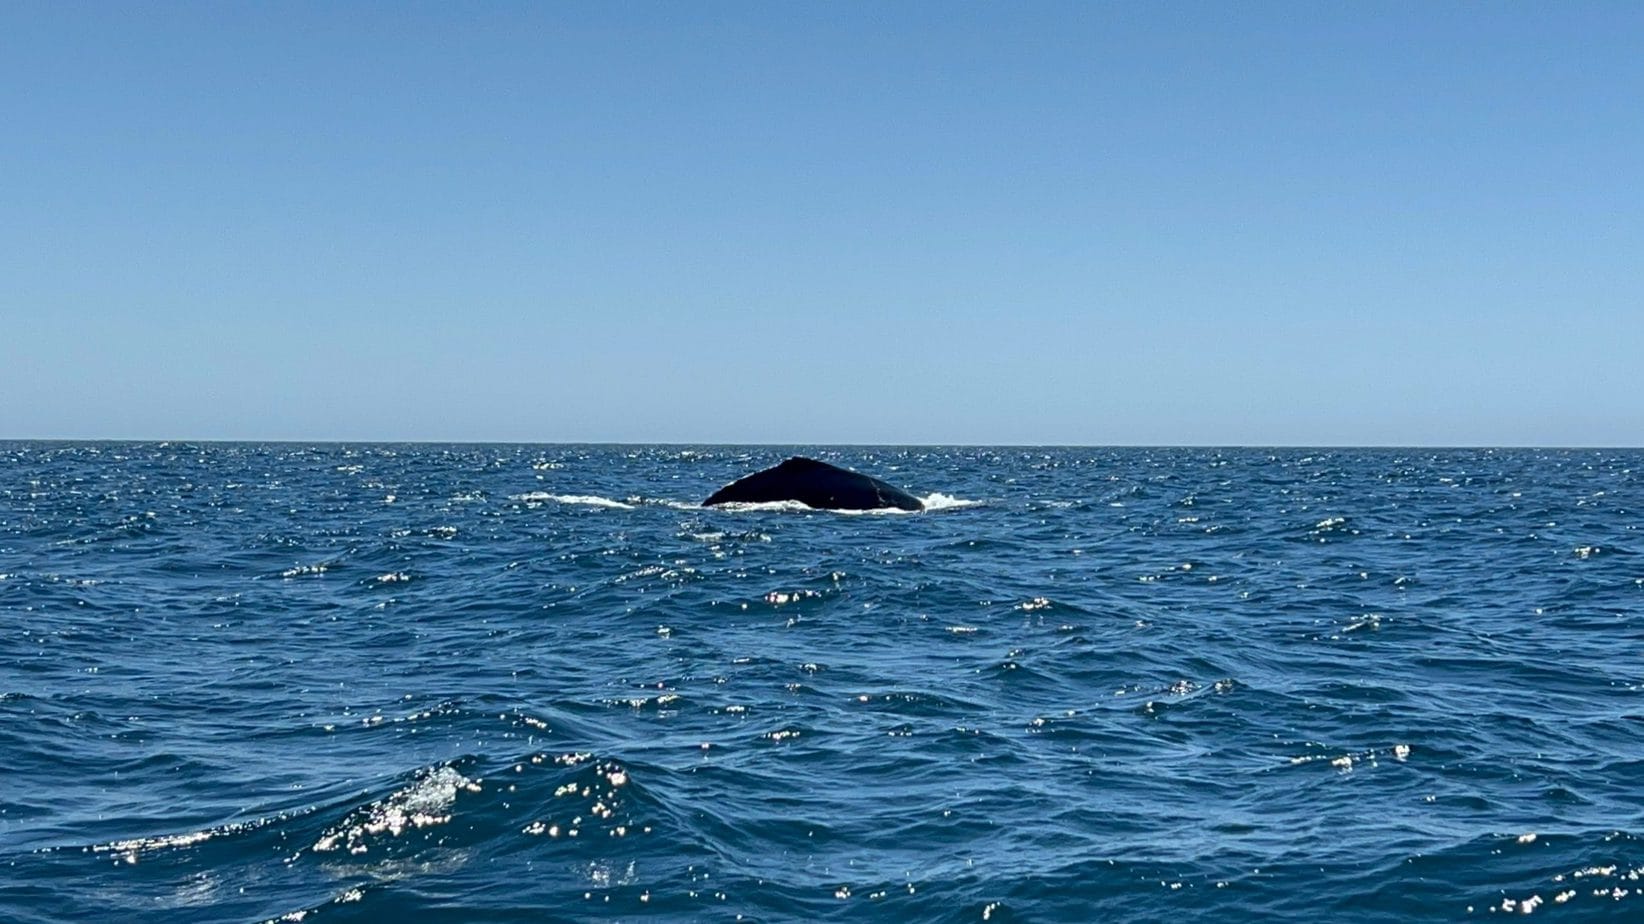 Glimpse of whale in ocean